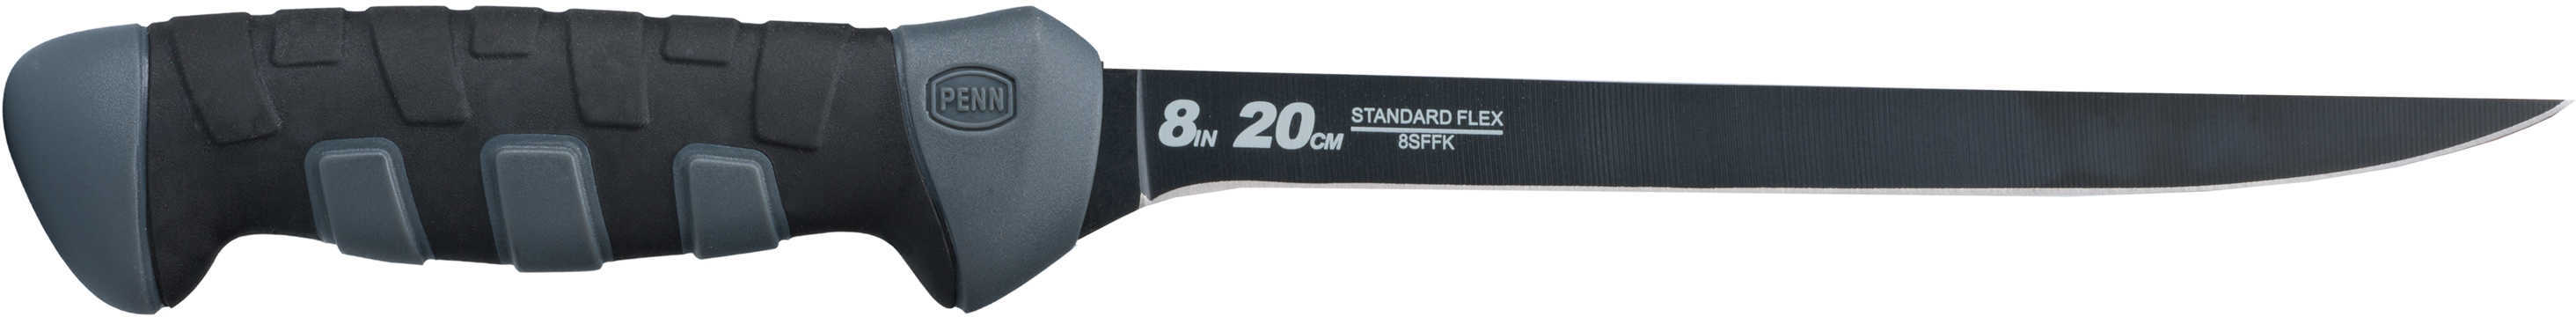 Penn Fillet Knives 8" Standard Flex, Black/Gray Md: 1366264